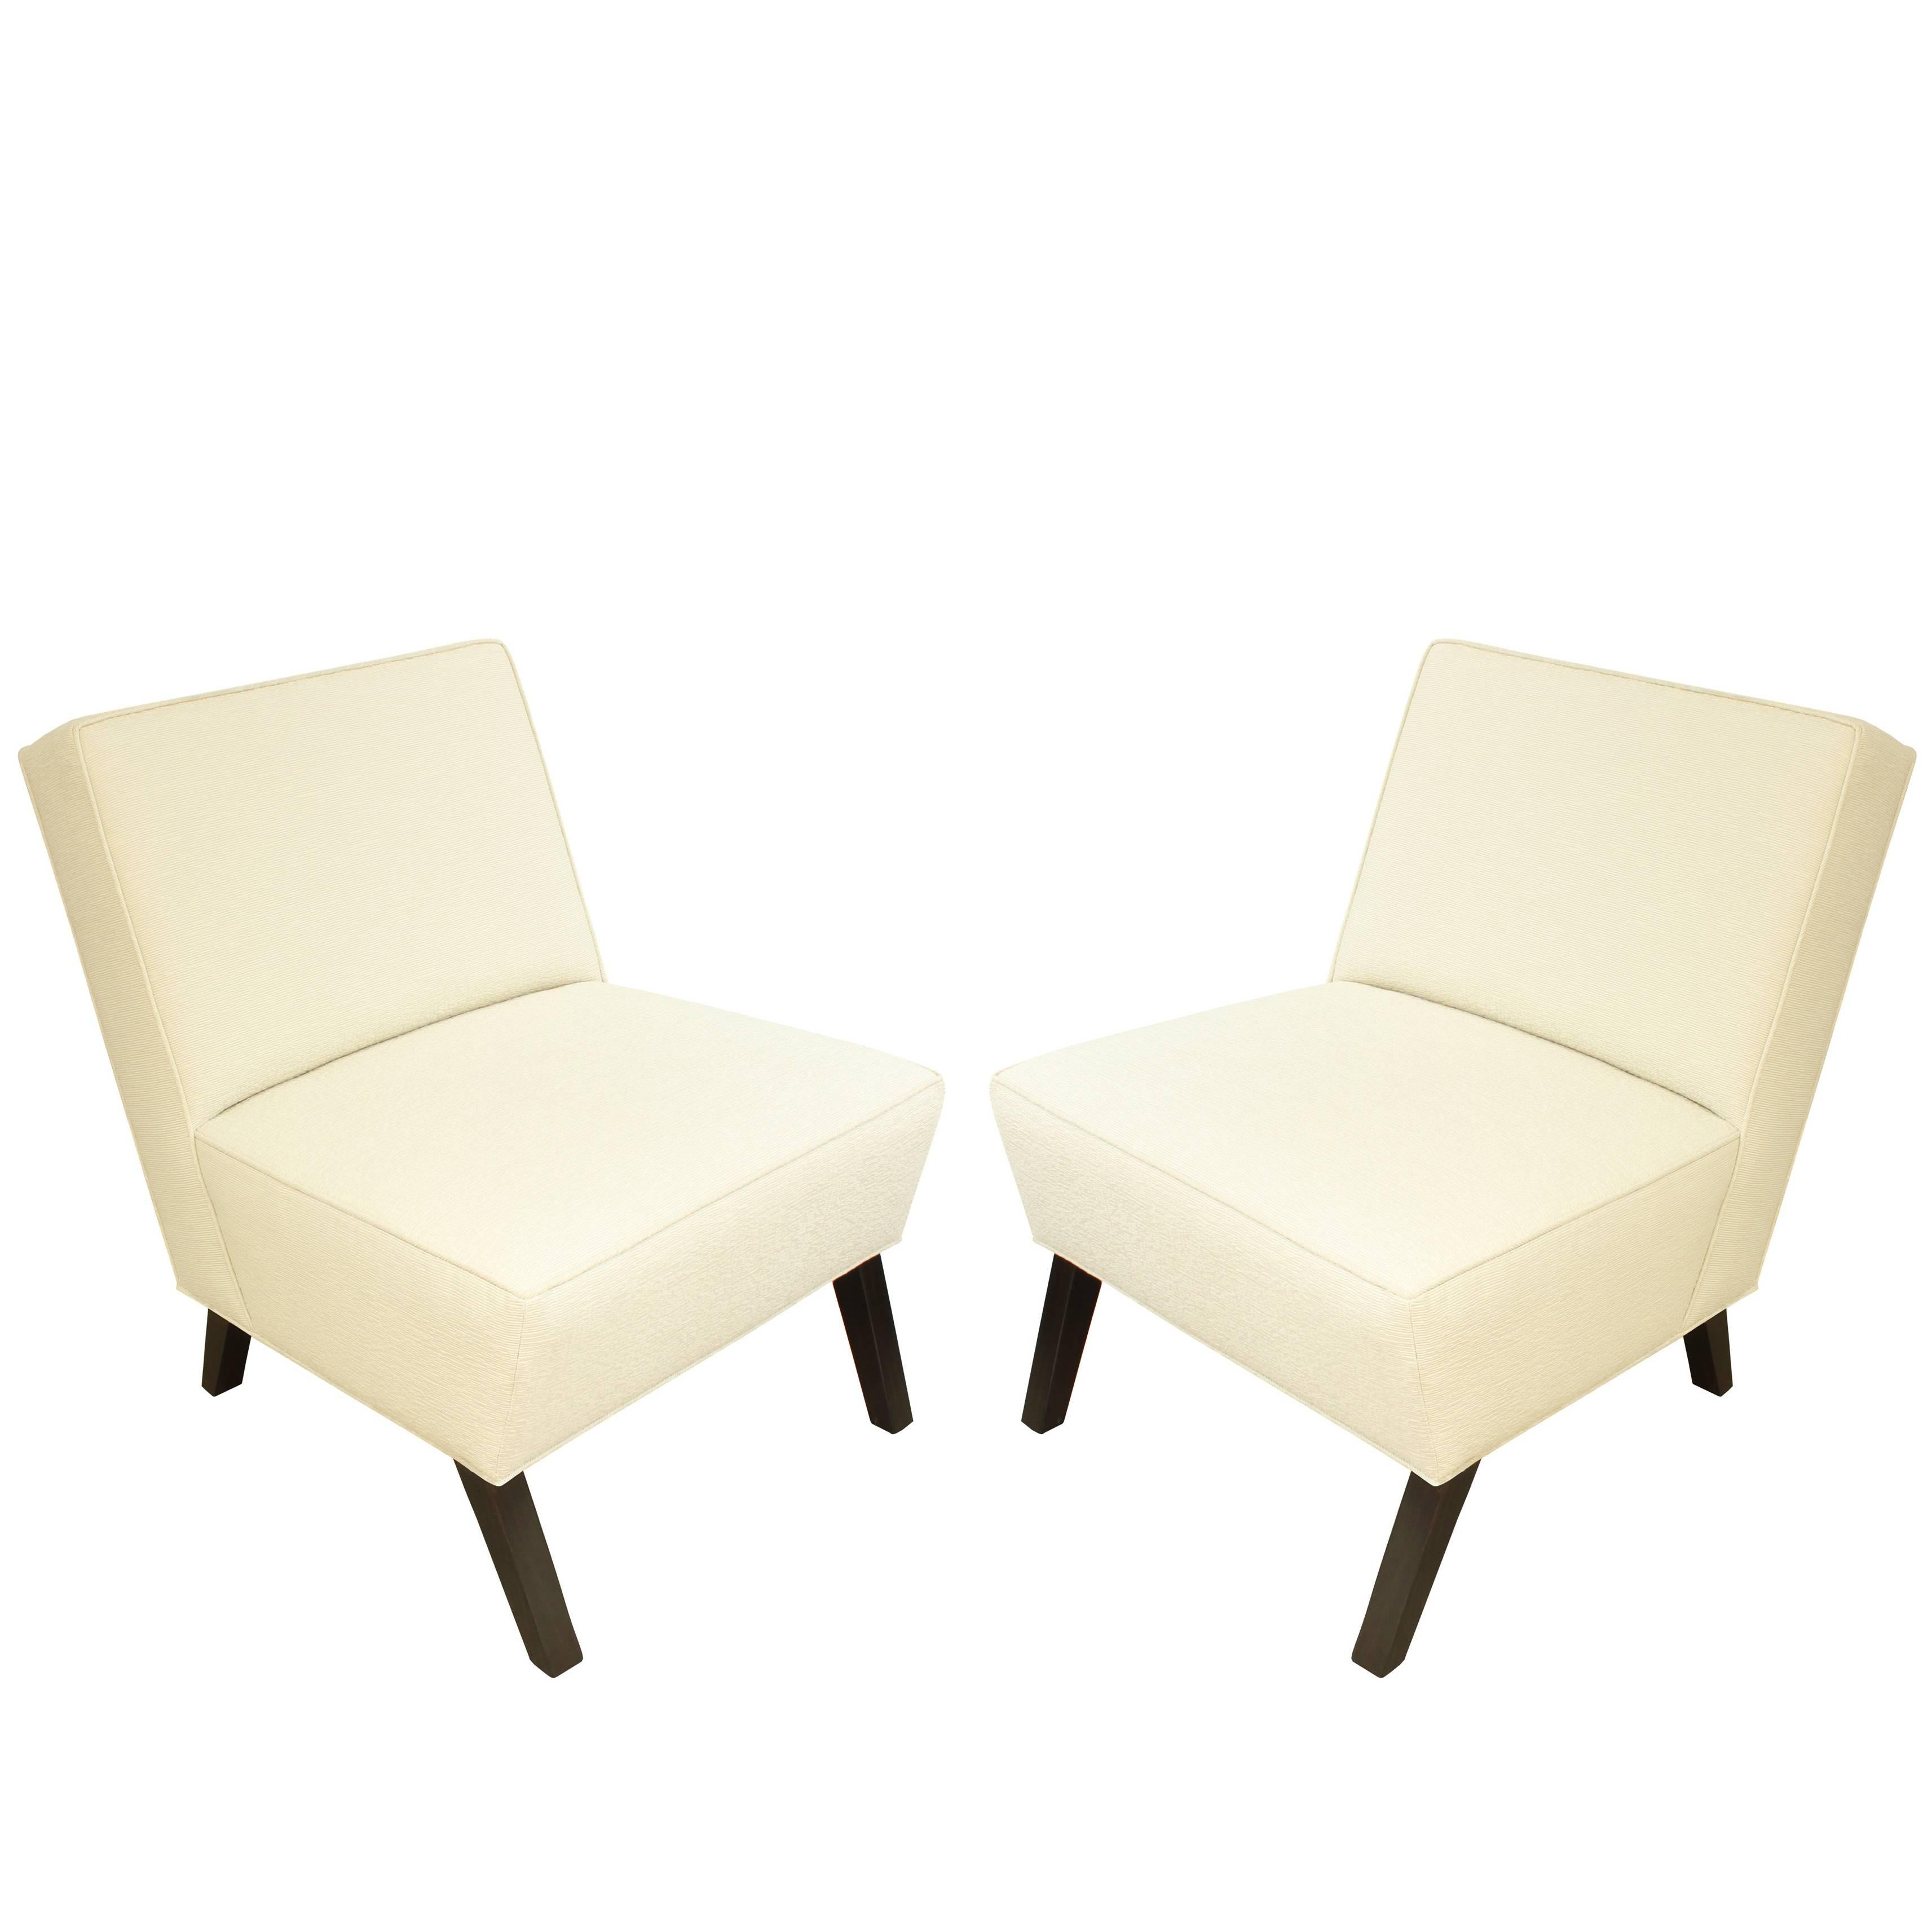 Pair of Elegant Slipper Chairs